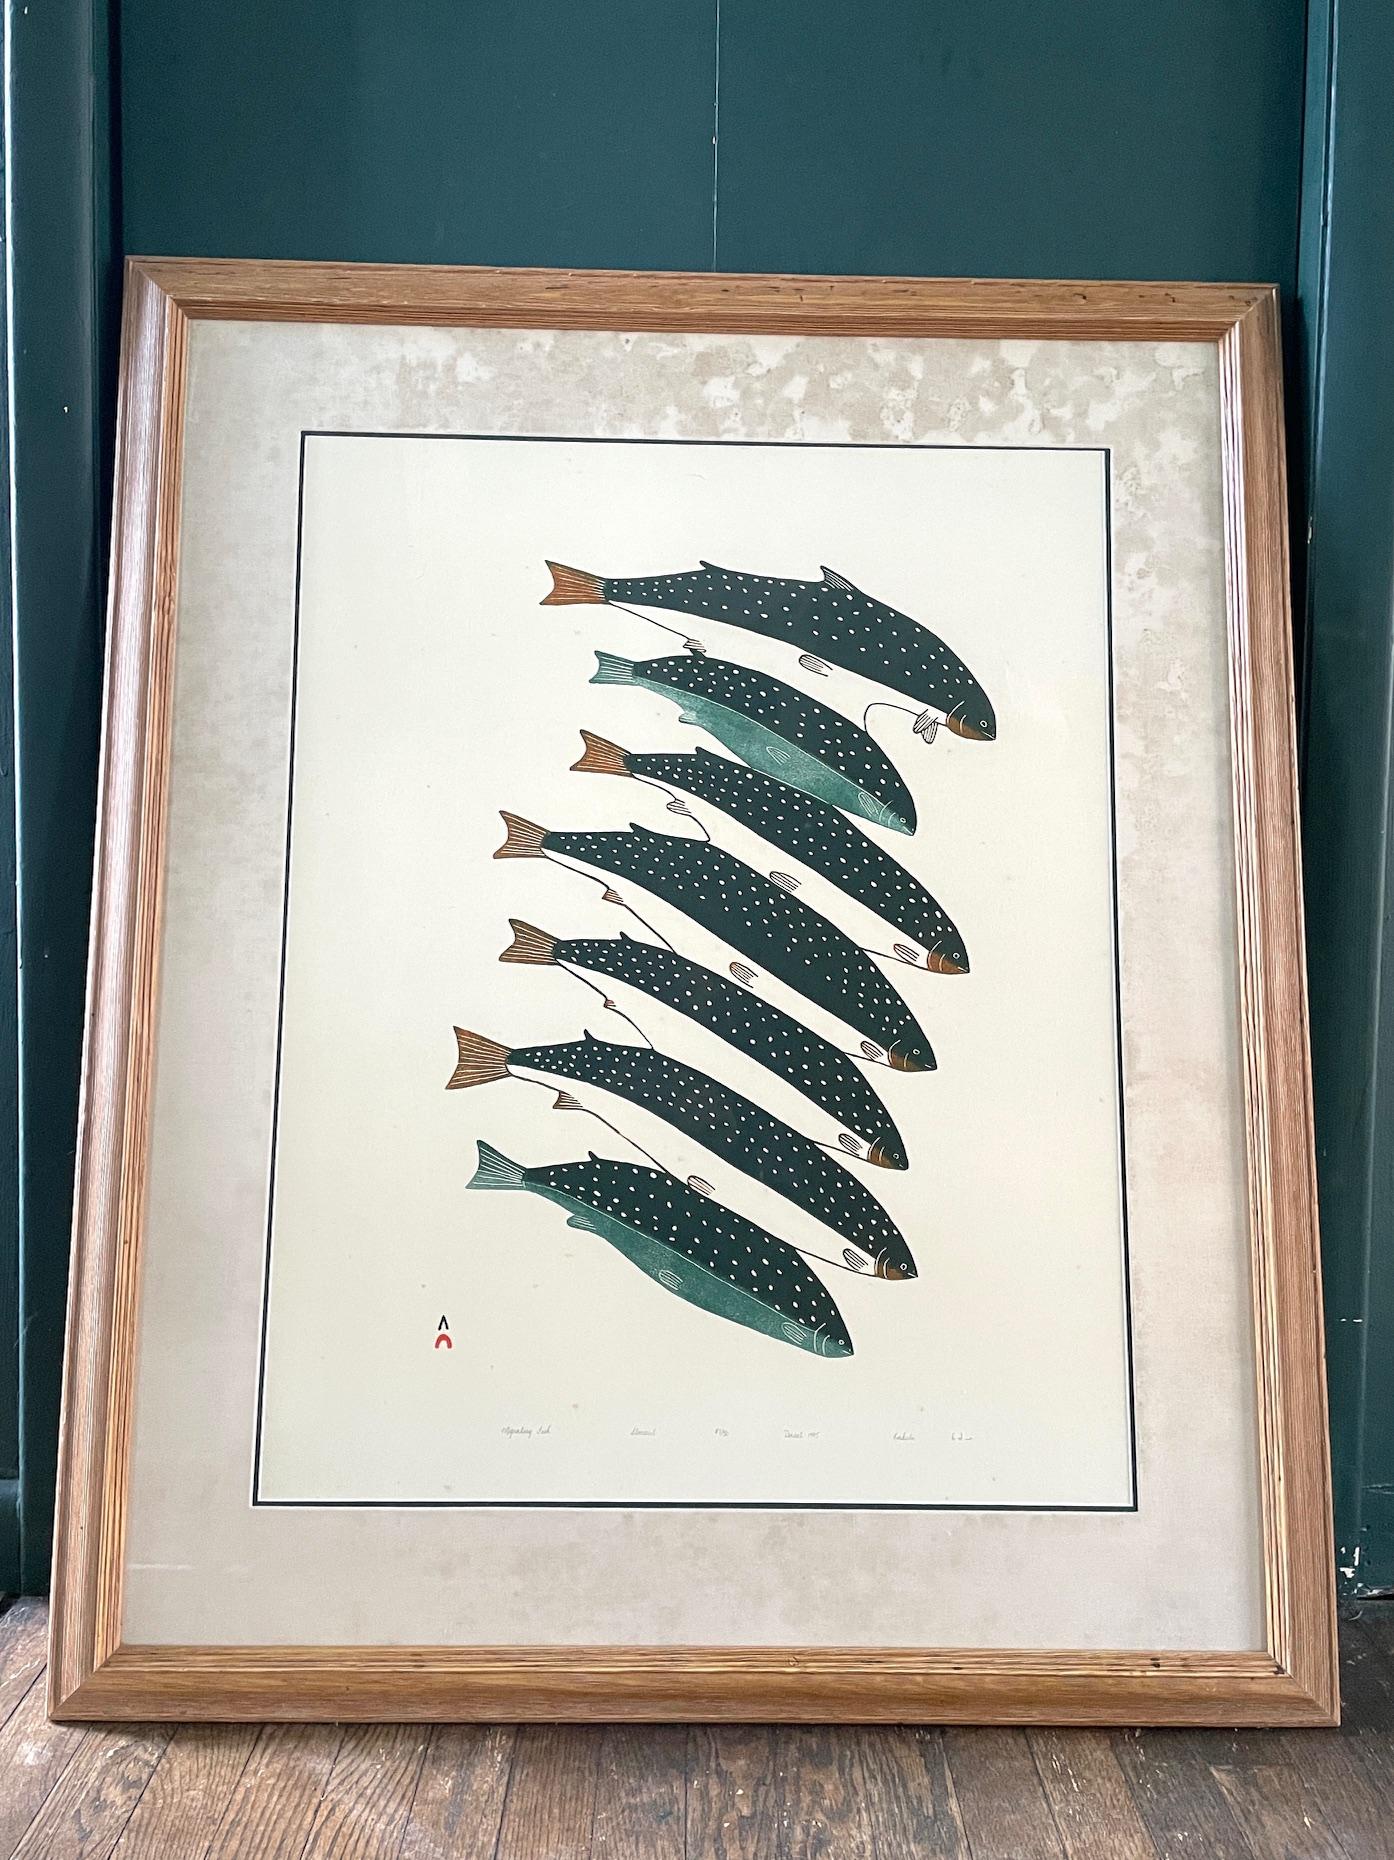 Paper Kakulu Saggiaktok Migrating Fish Stonecut Art Canada Baffin Dorset Inuit Culture For Sale